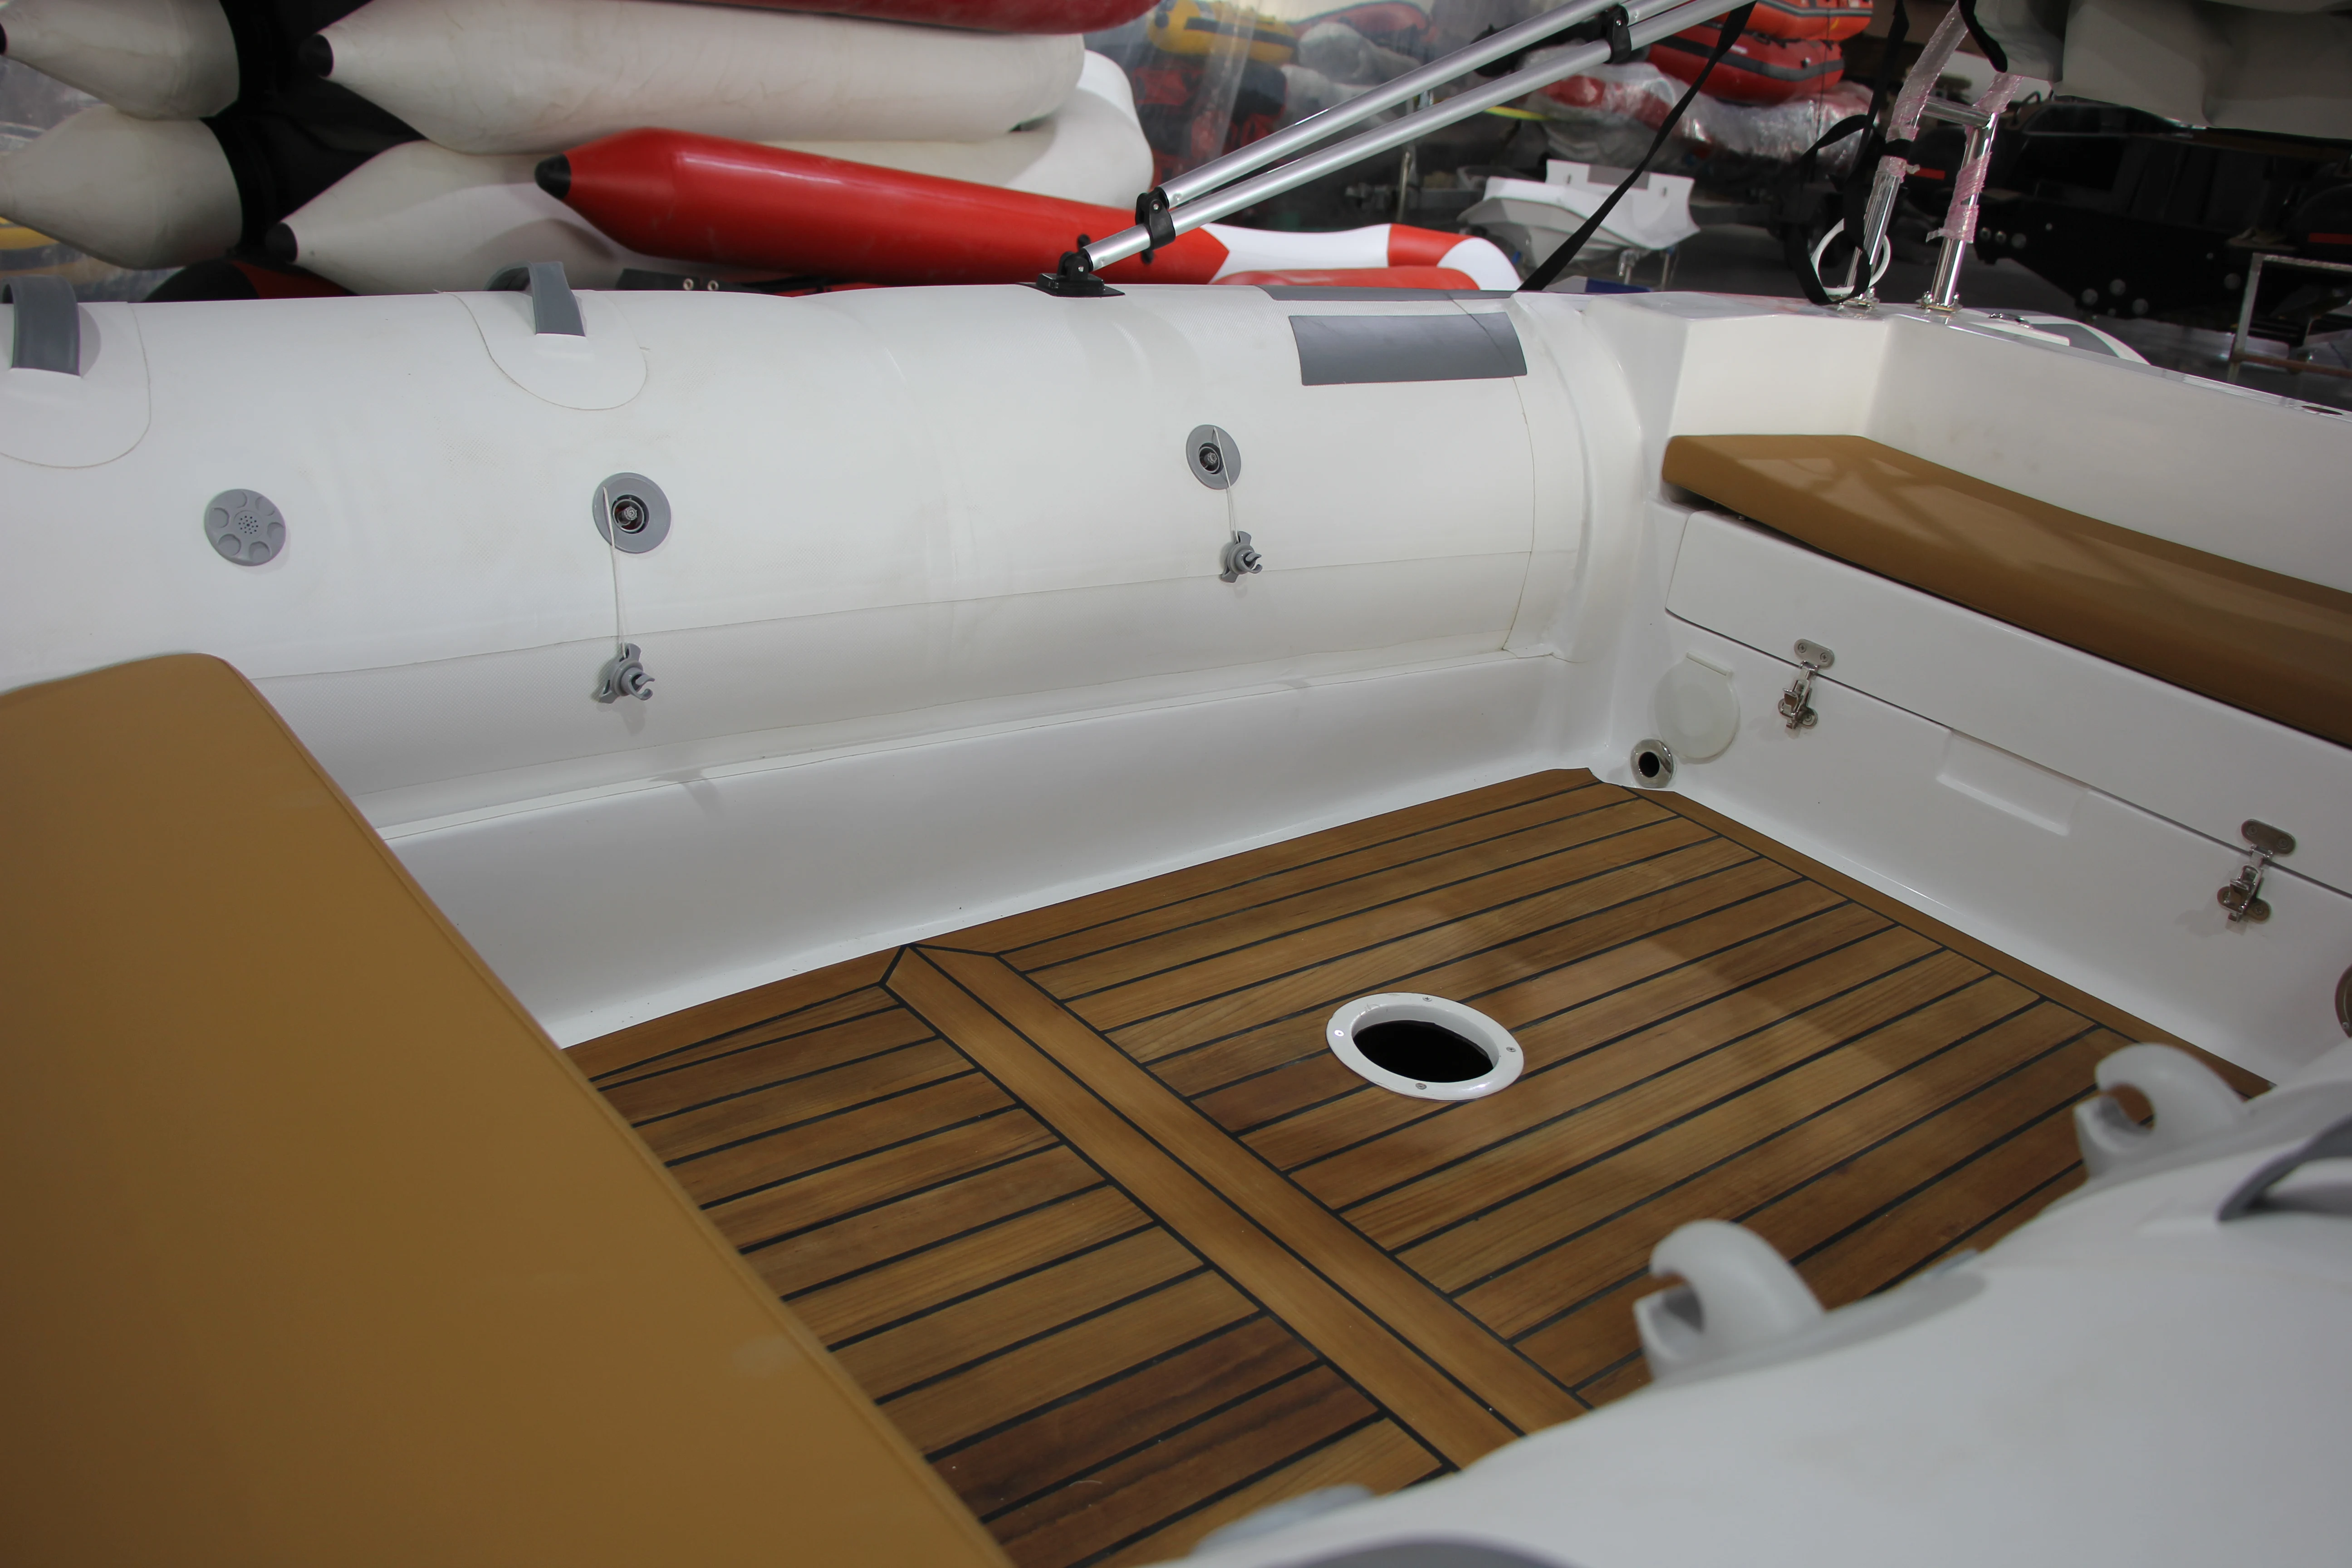 4.8m Rib Boat Rib-480 With Motor Engine Hypalon Rib Boat With Console